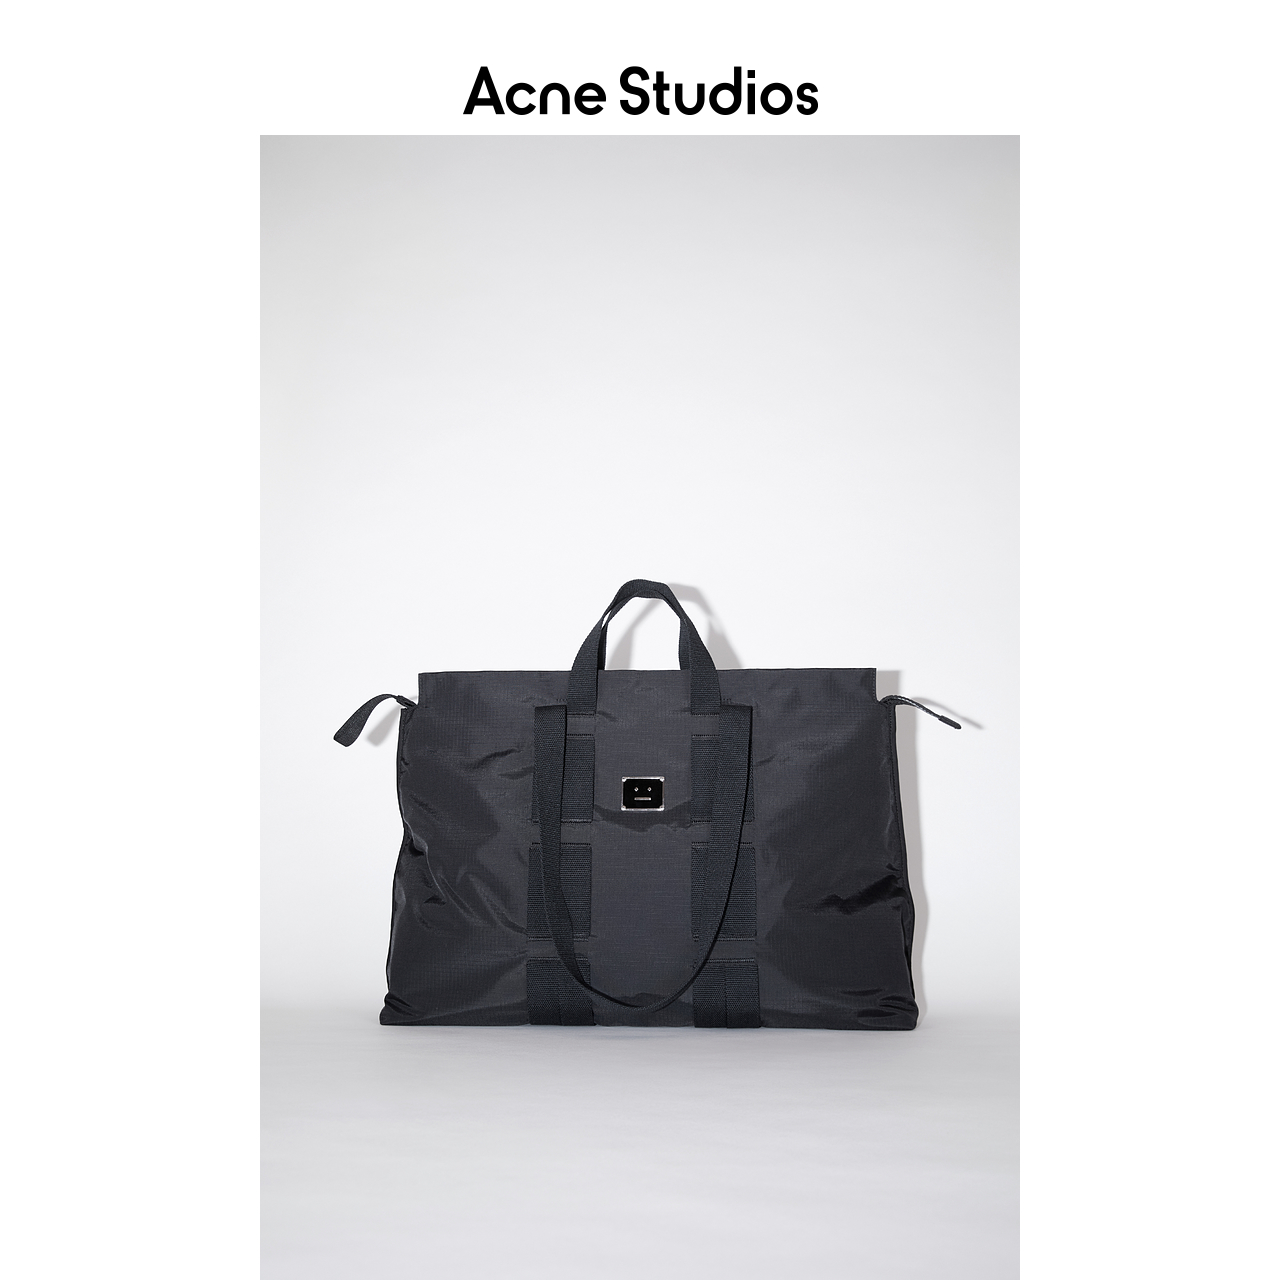 Acne Studios 新款黑色笑脸铭牌大容量托特包tote包 C10074-900